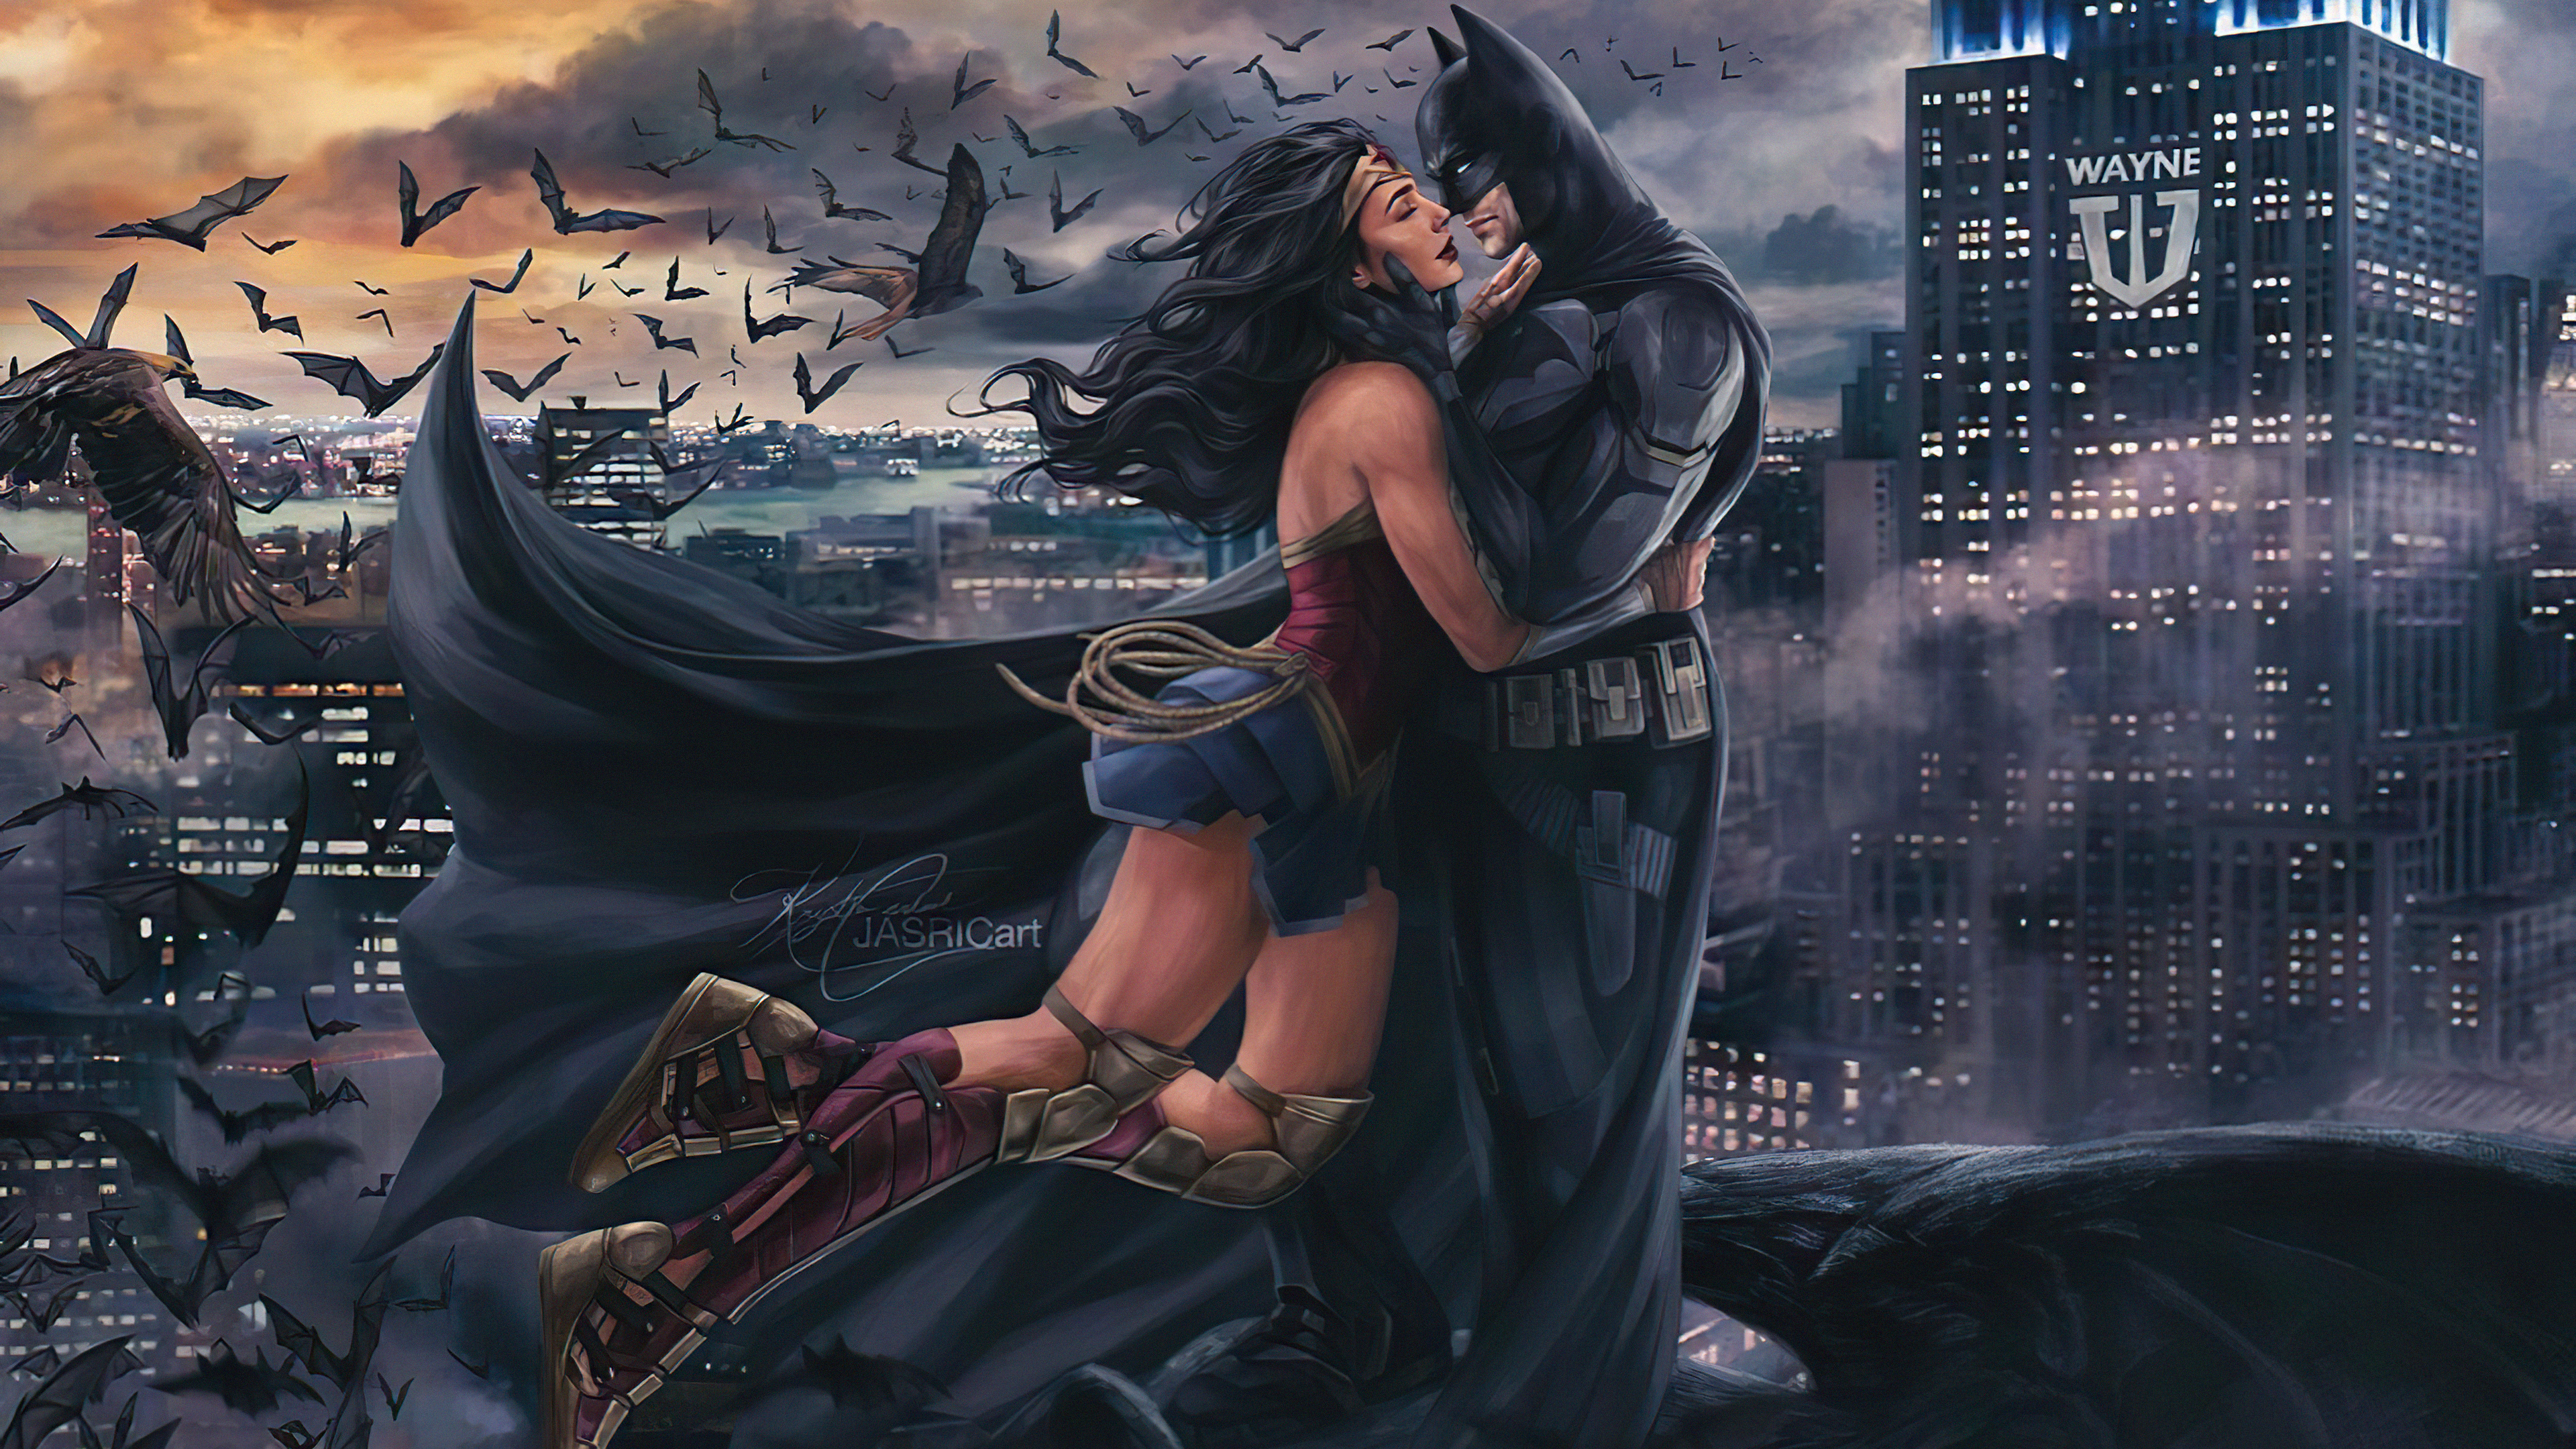 Batman And Wonder Woman Romantic Moment 4k In 3840x2160 Resolution. batman-...